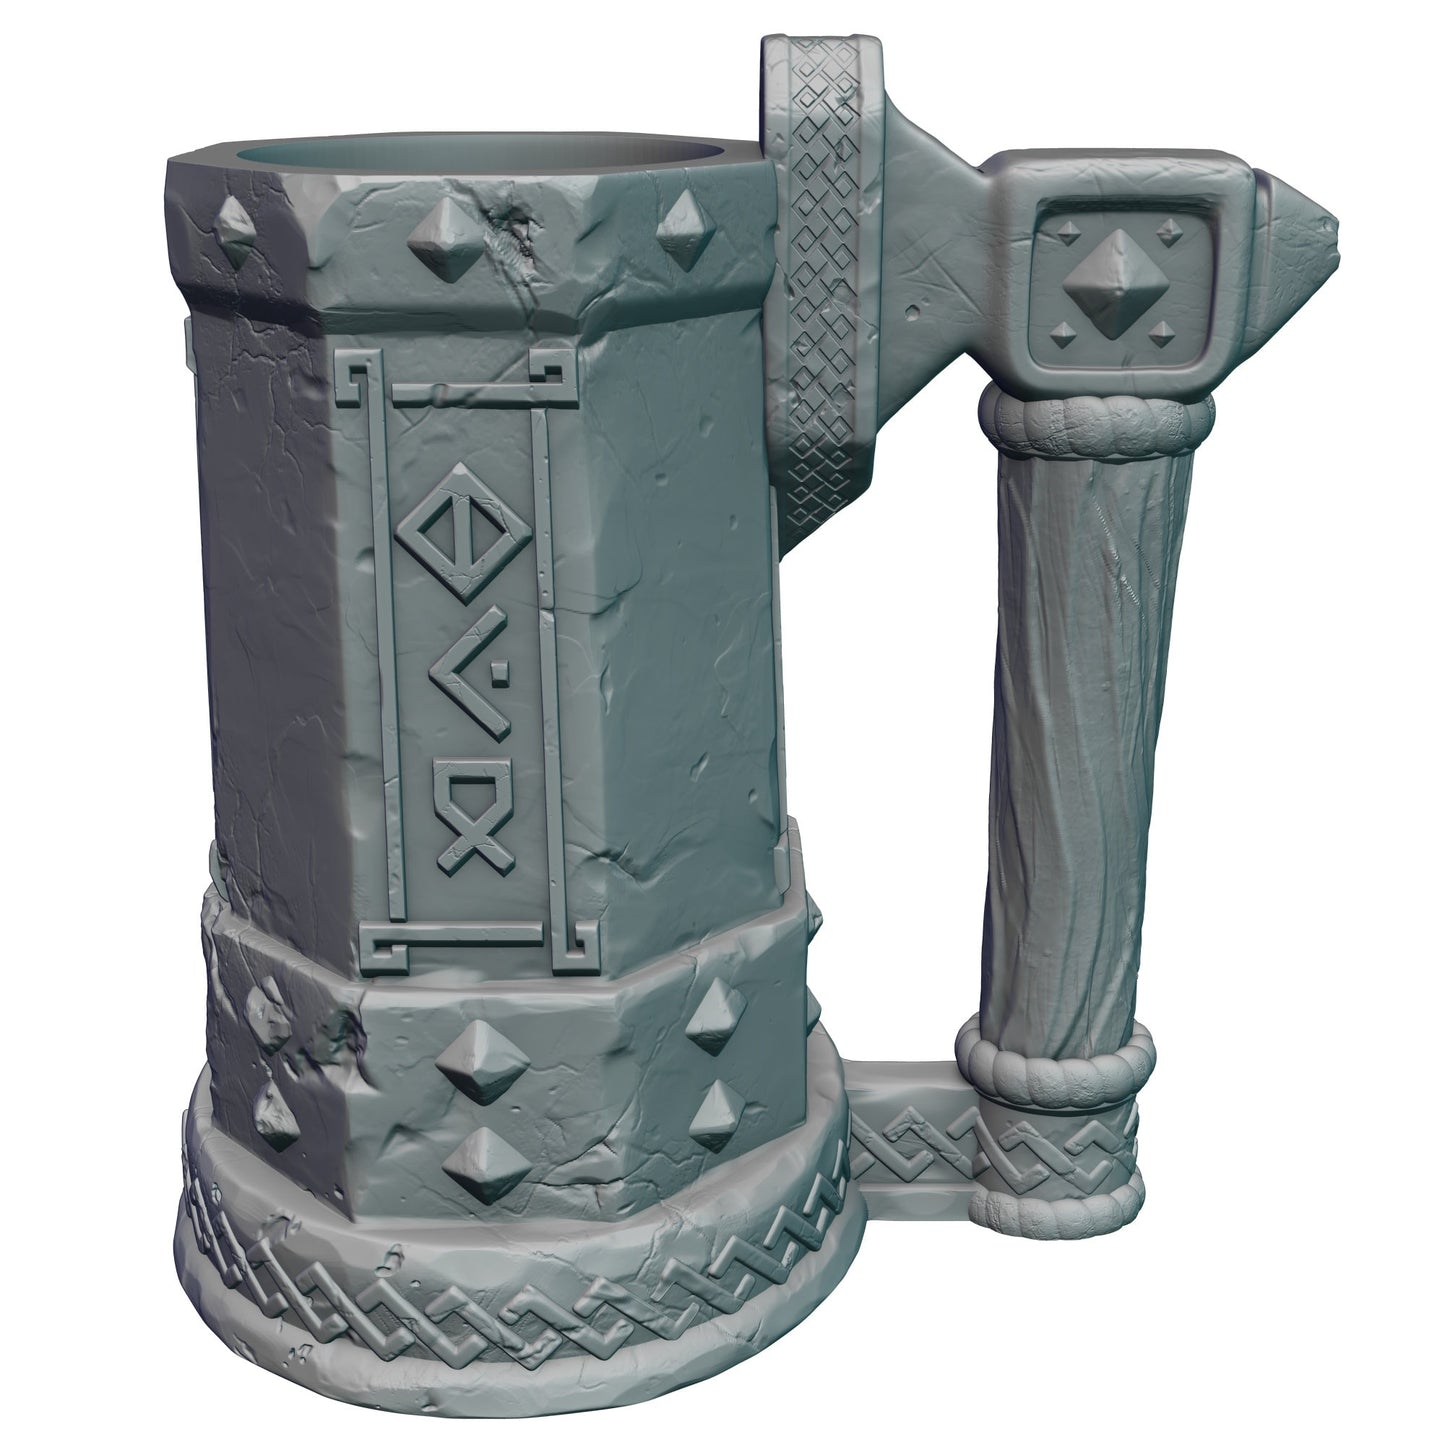 Dwarven 3D Printed Mythic Mug Drink Koozie | Dwarf Dice Vault | Mug Stein | Tabletop RPG Gaming Cosplay - Dungeons and Dragon DnD Wargaming